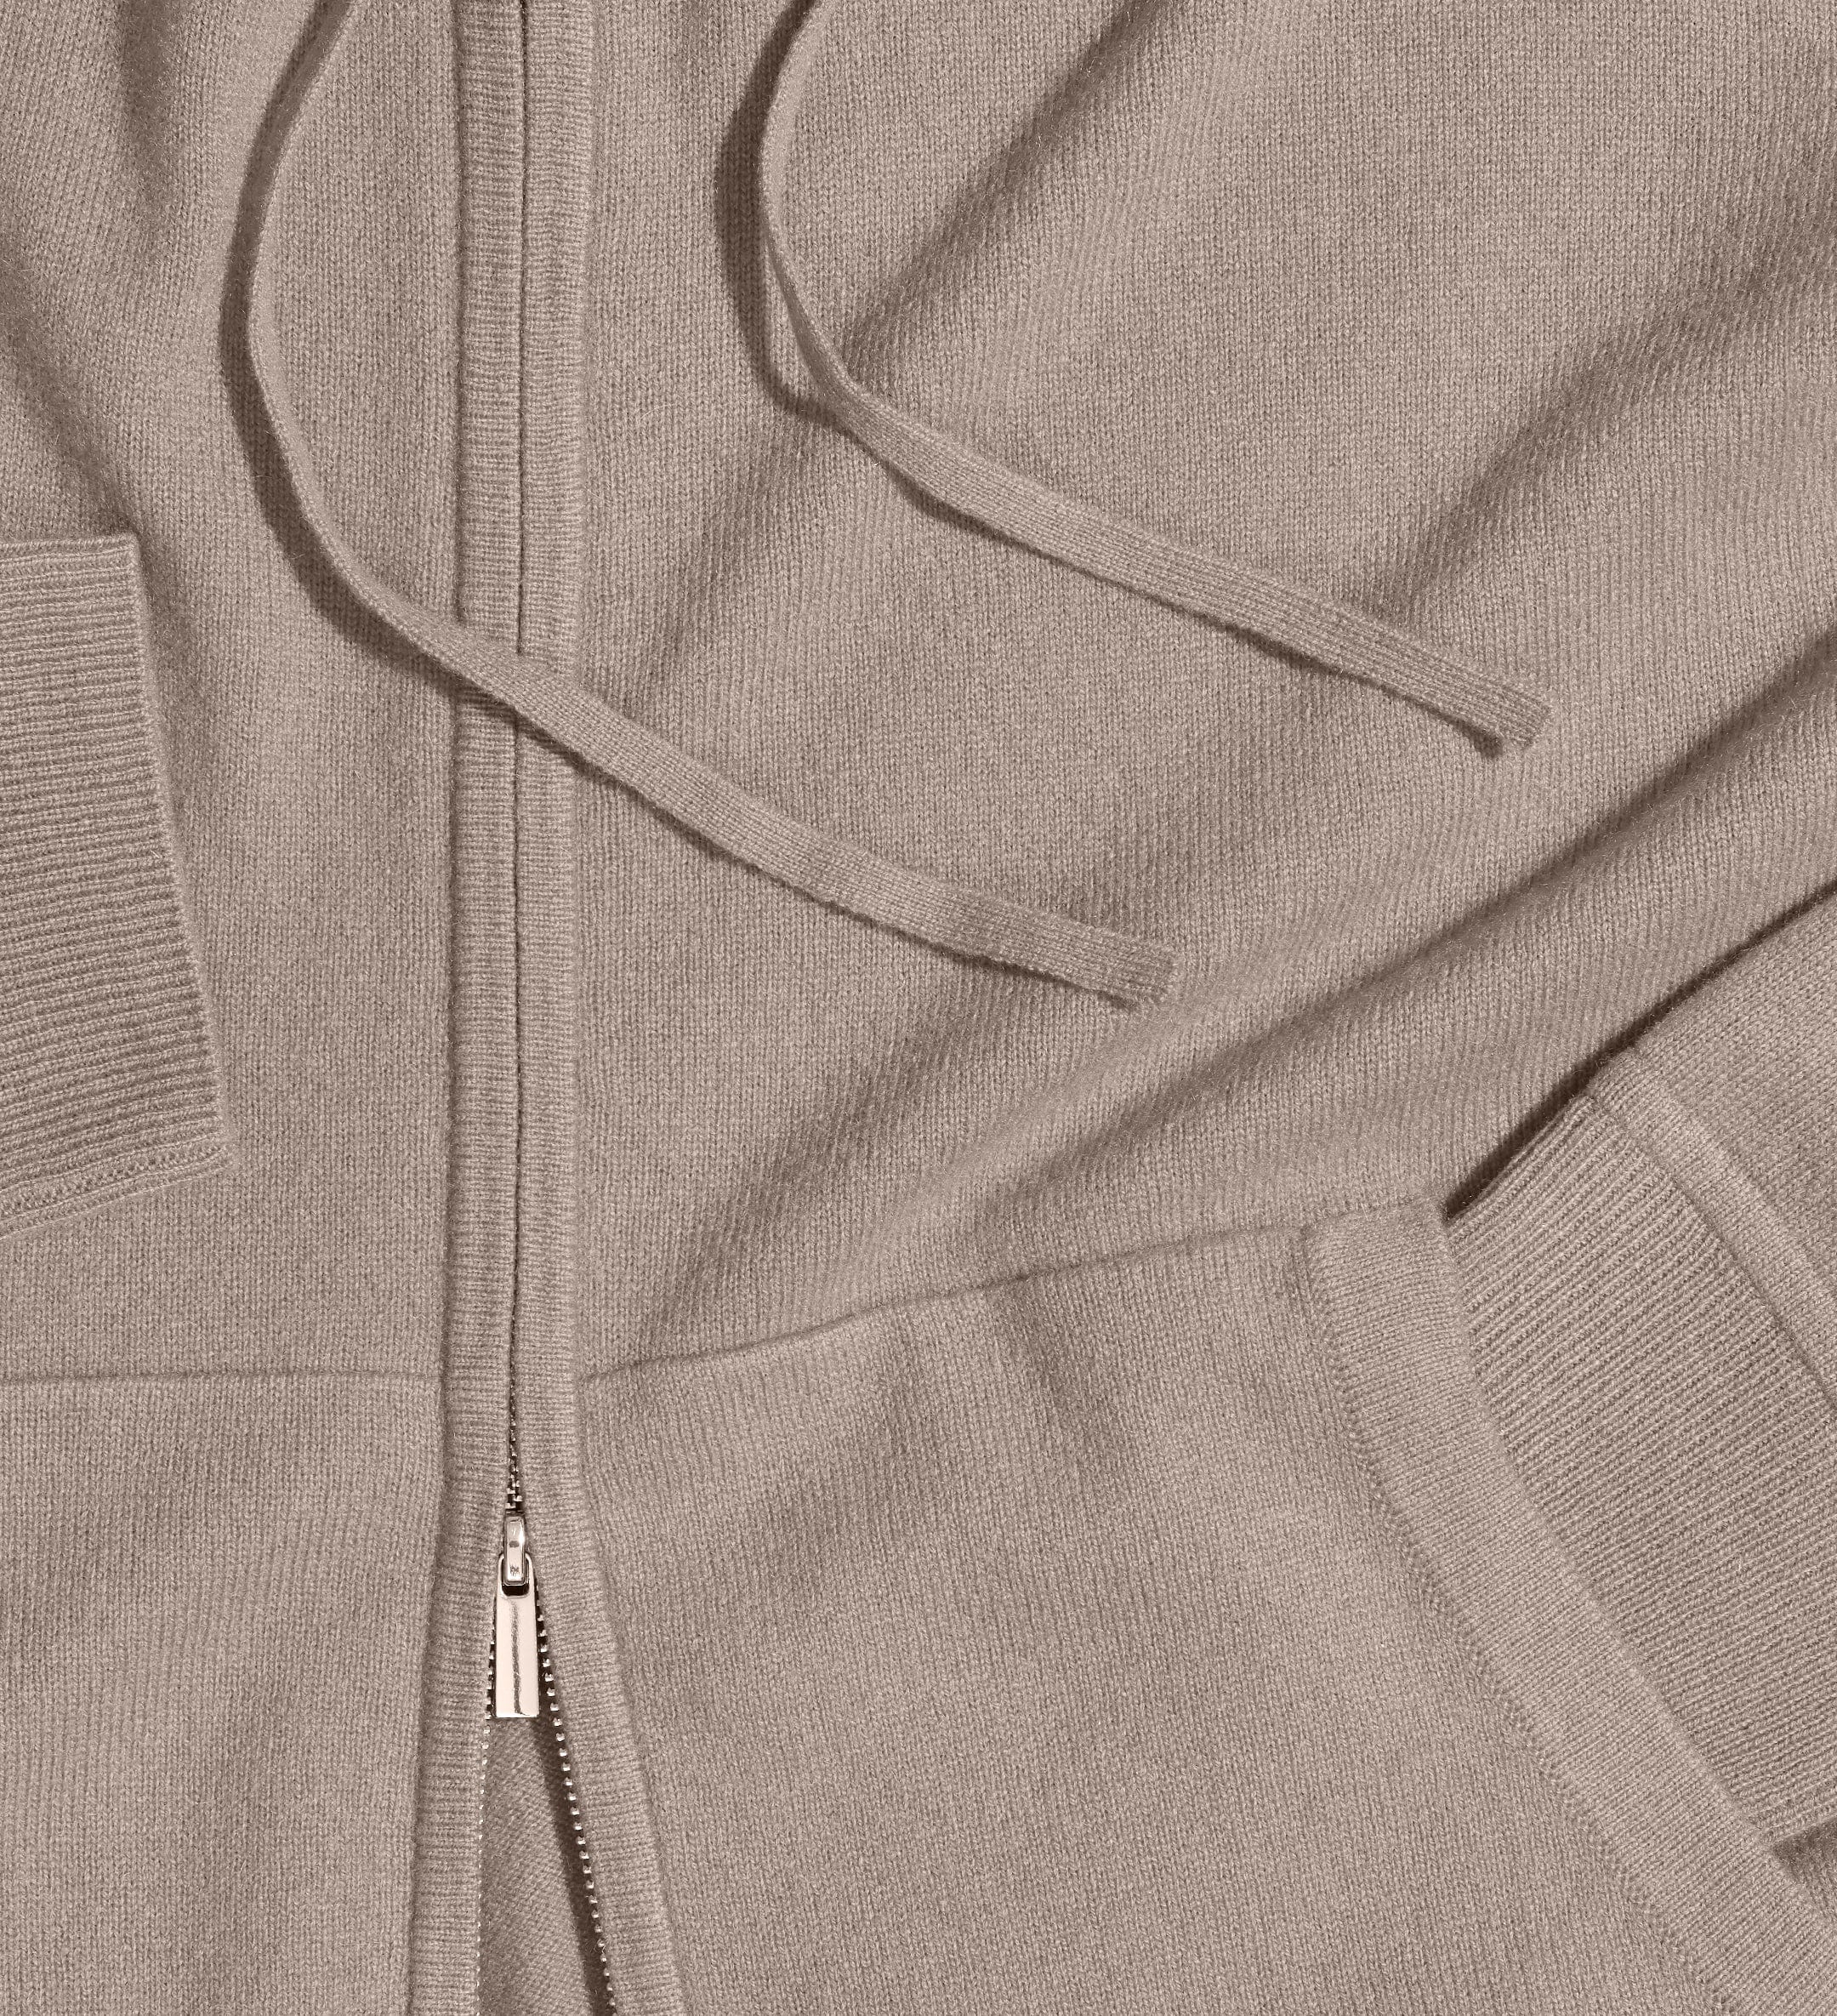 Stitches 18600lxr00s265hmbflc Zip Hood, Size: Large, Black